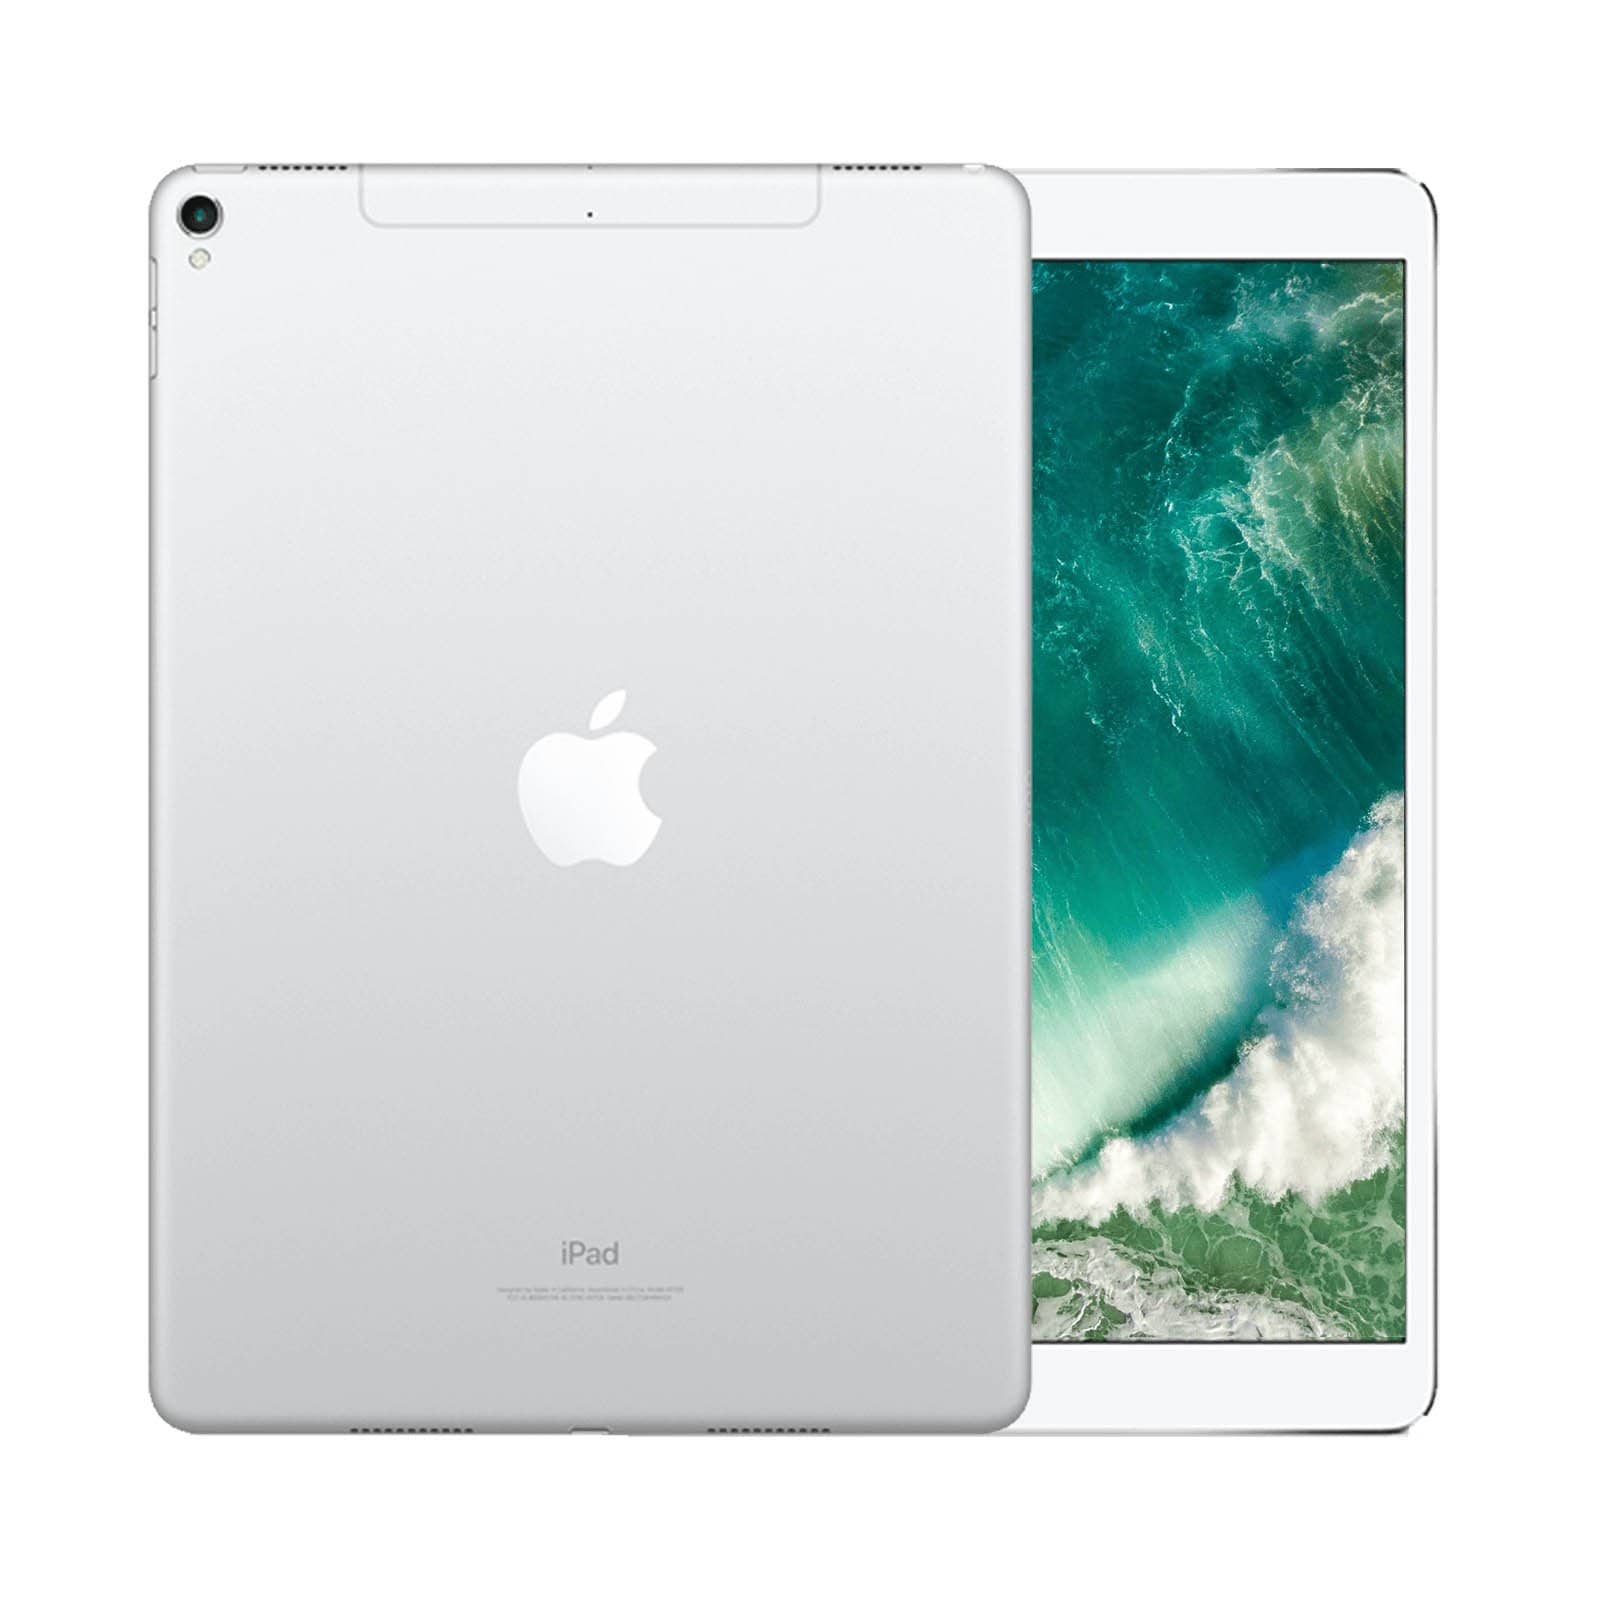 iPad Pro 10.5 Inch 256GB Silver Good - Unlocked